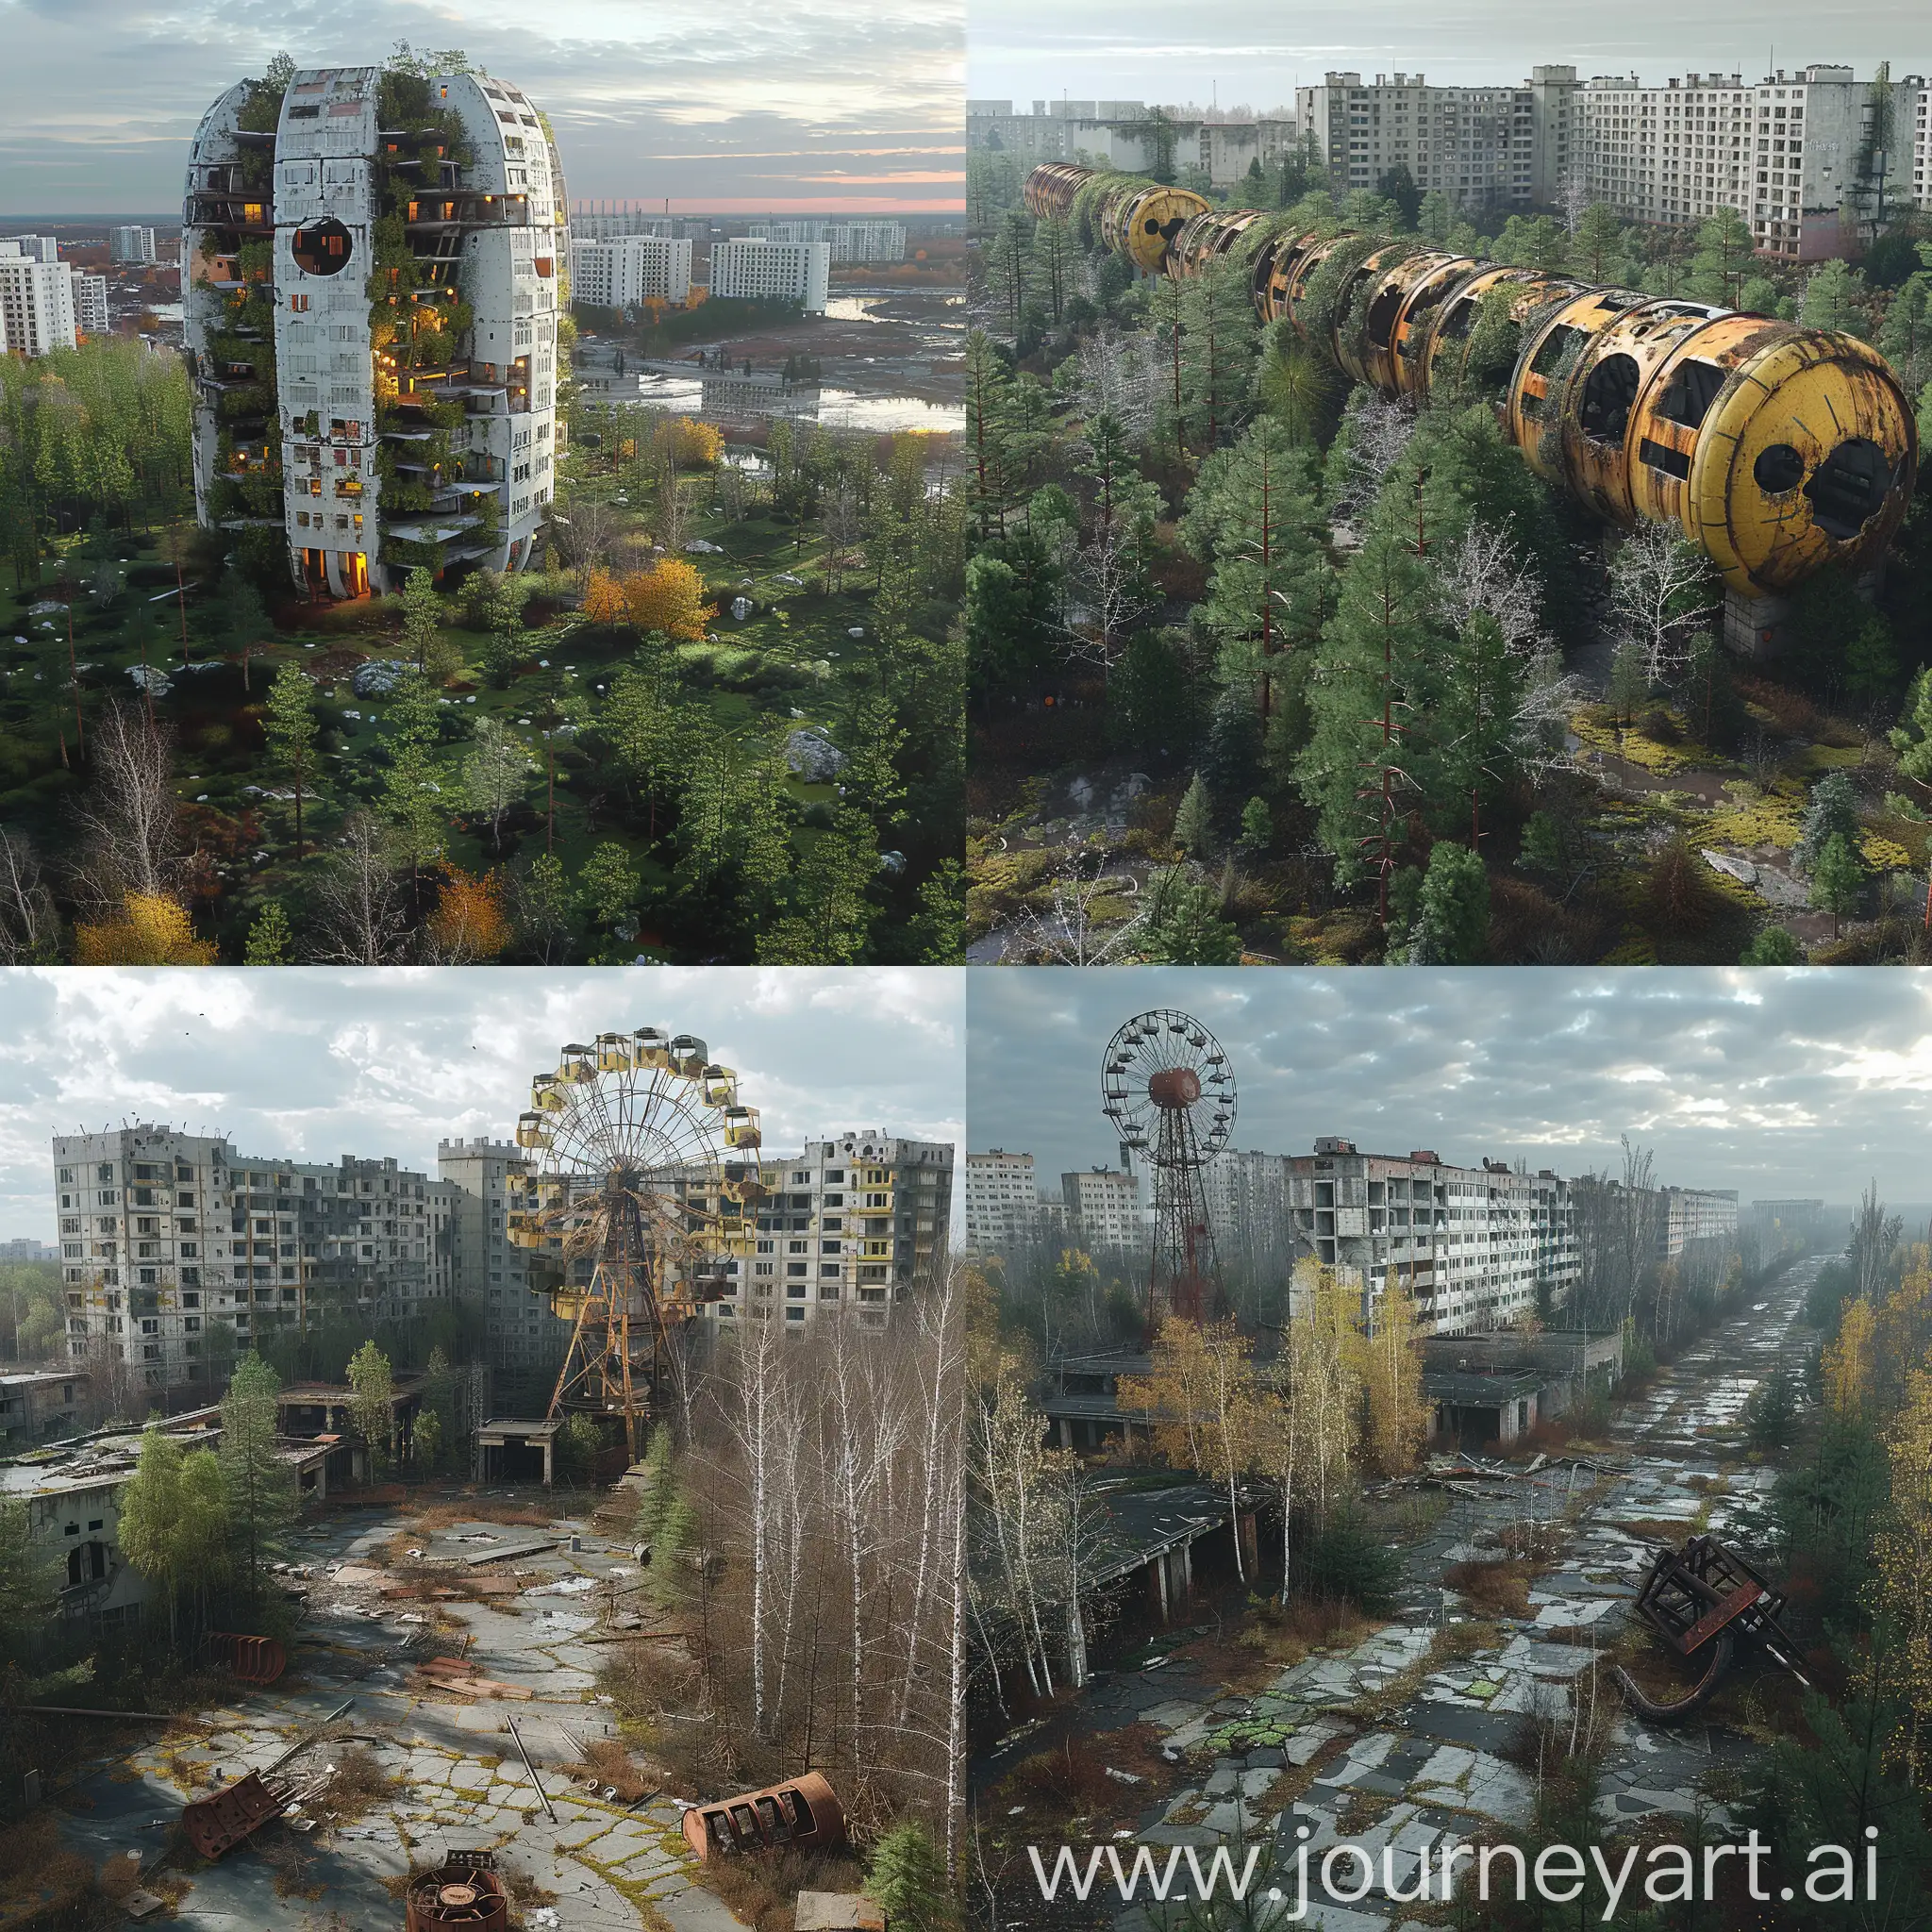 Futuristic-Chernobyl-Sustainable-Technologies-and-Nanotechnology-Innovations